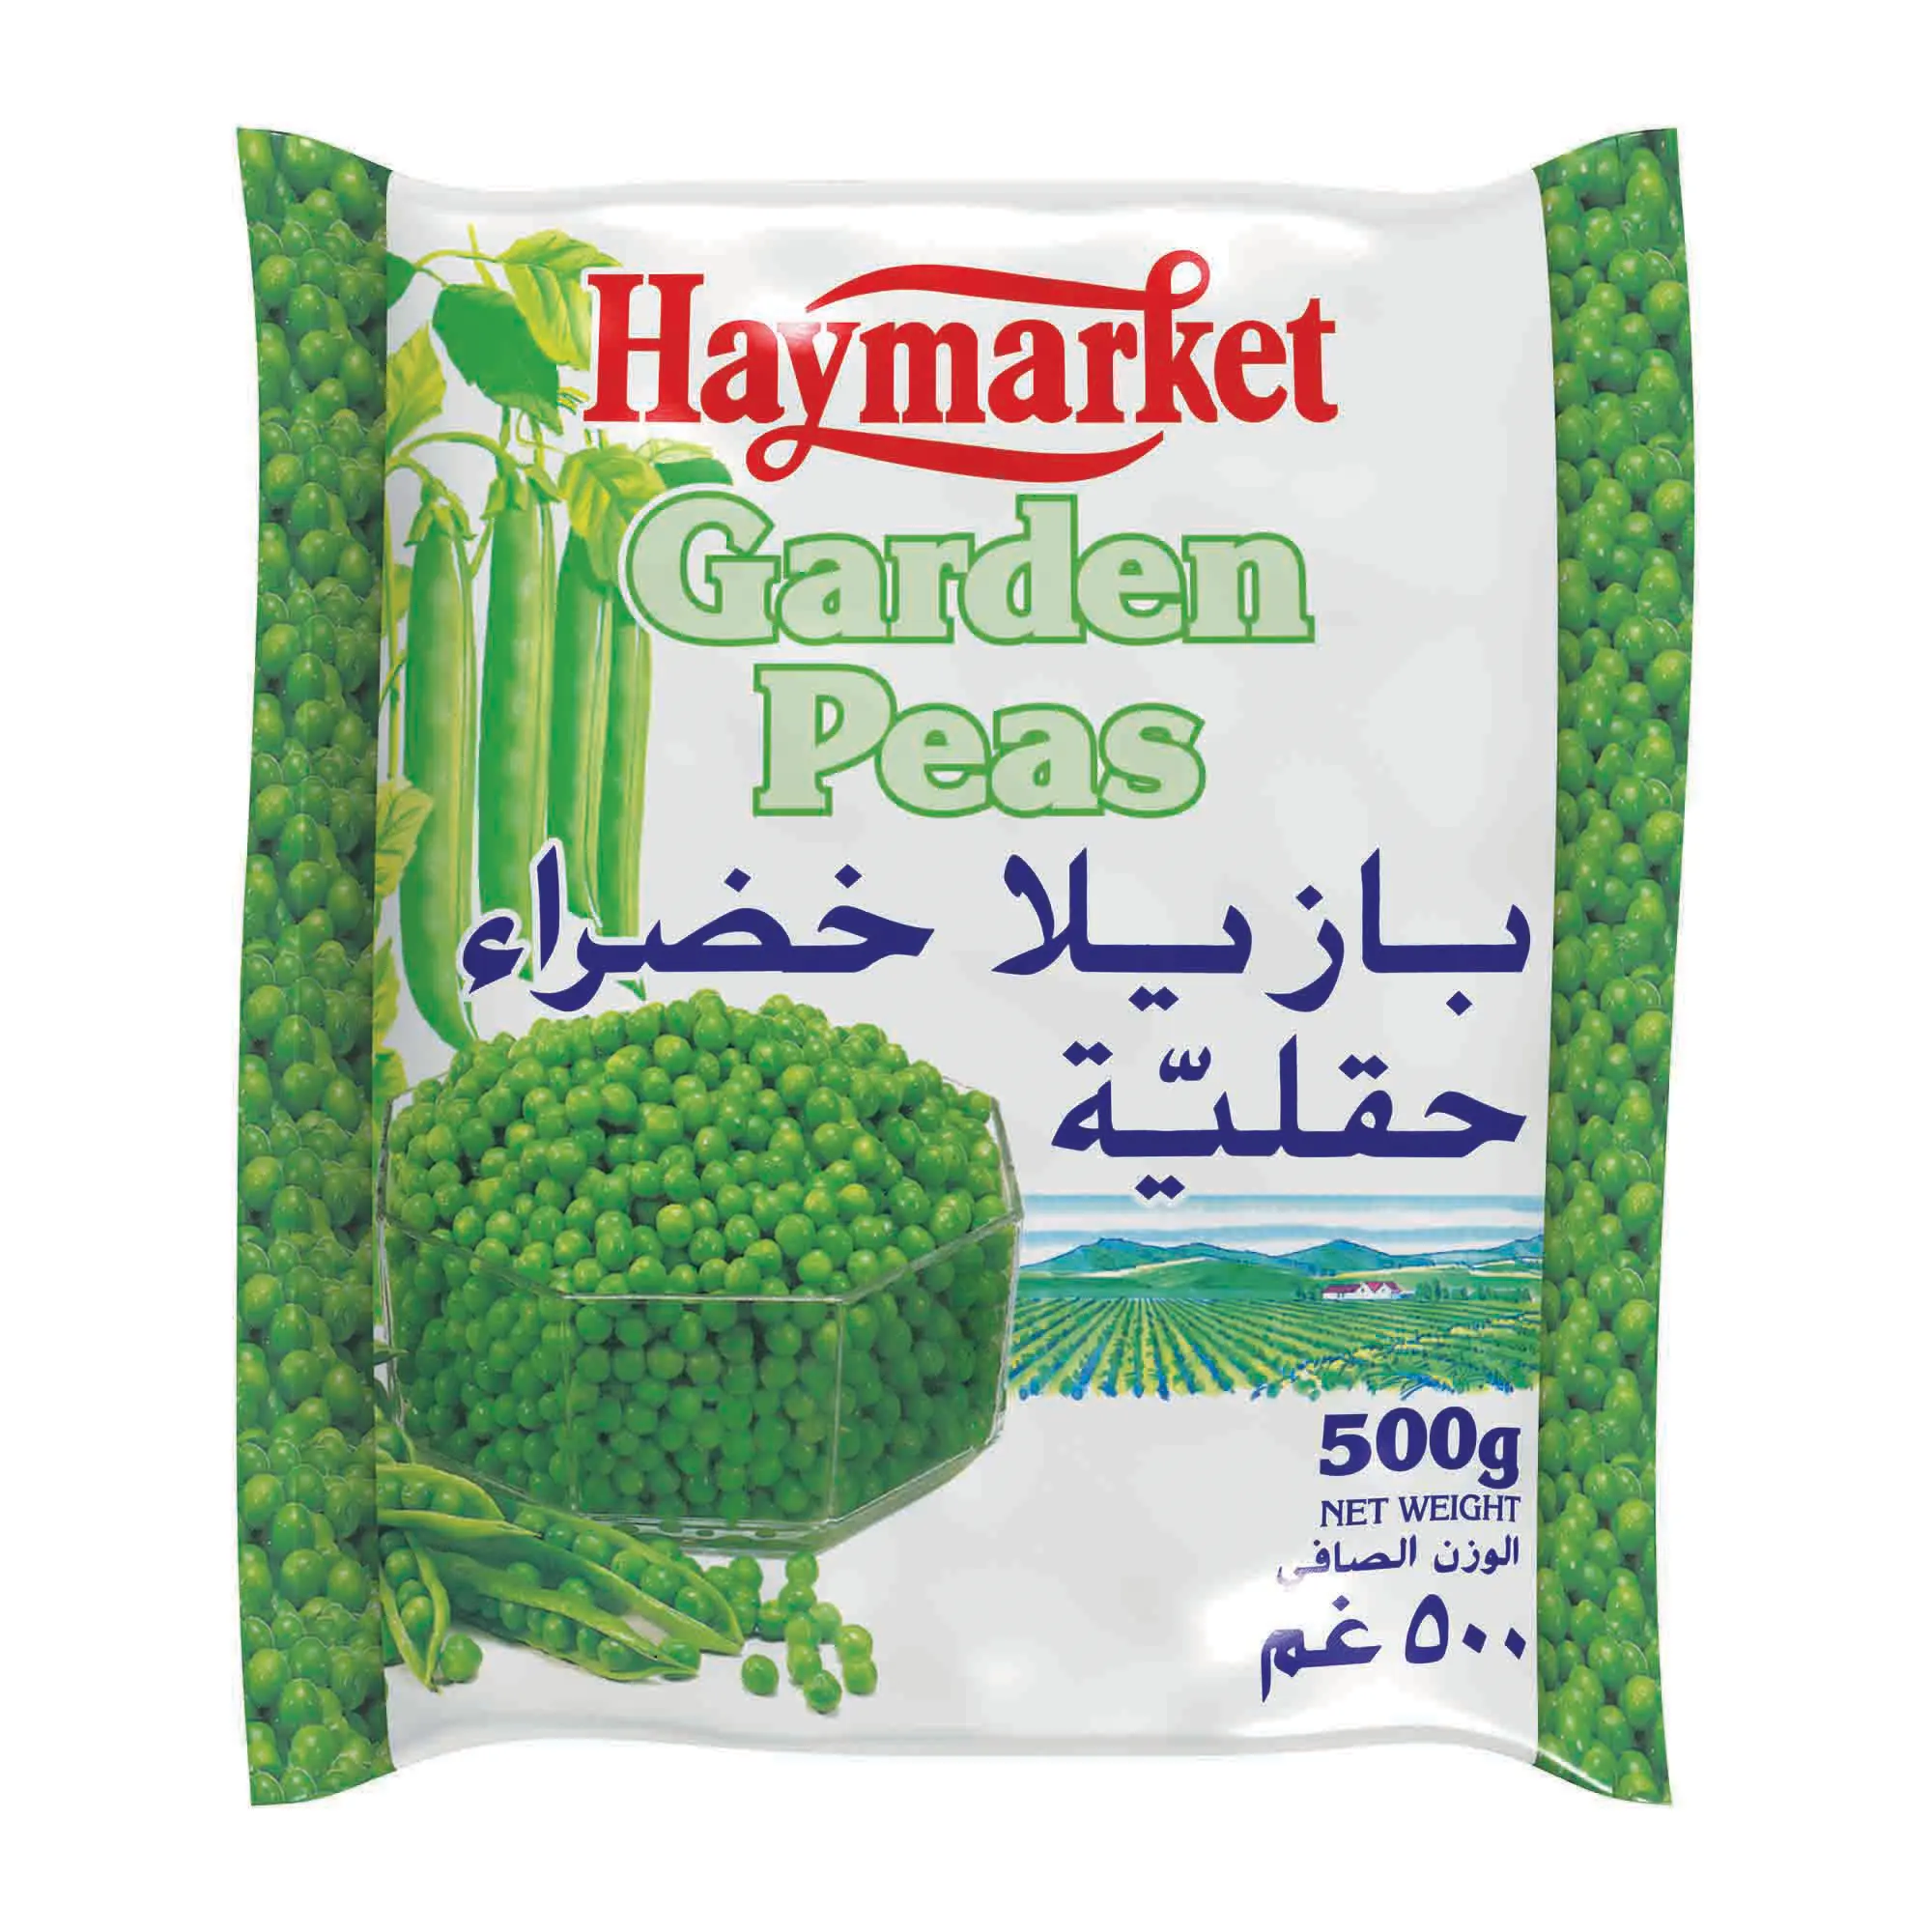 KAC -HAYMARKET GREEN PEAS N.ZLND 1kg